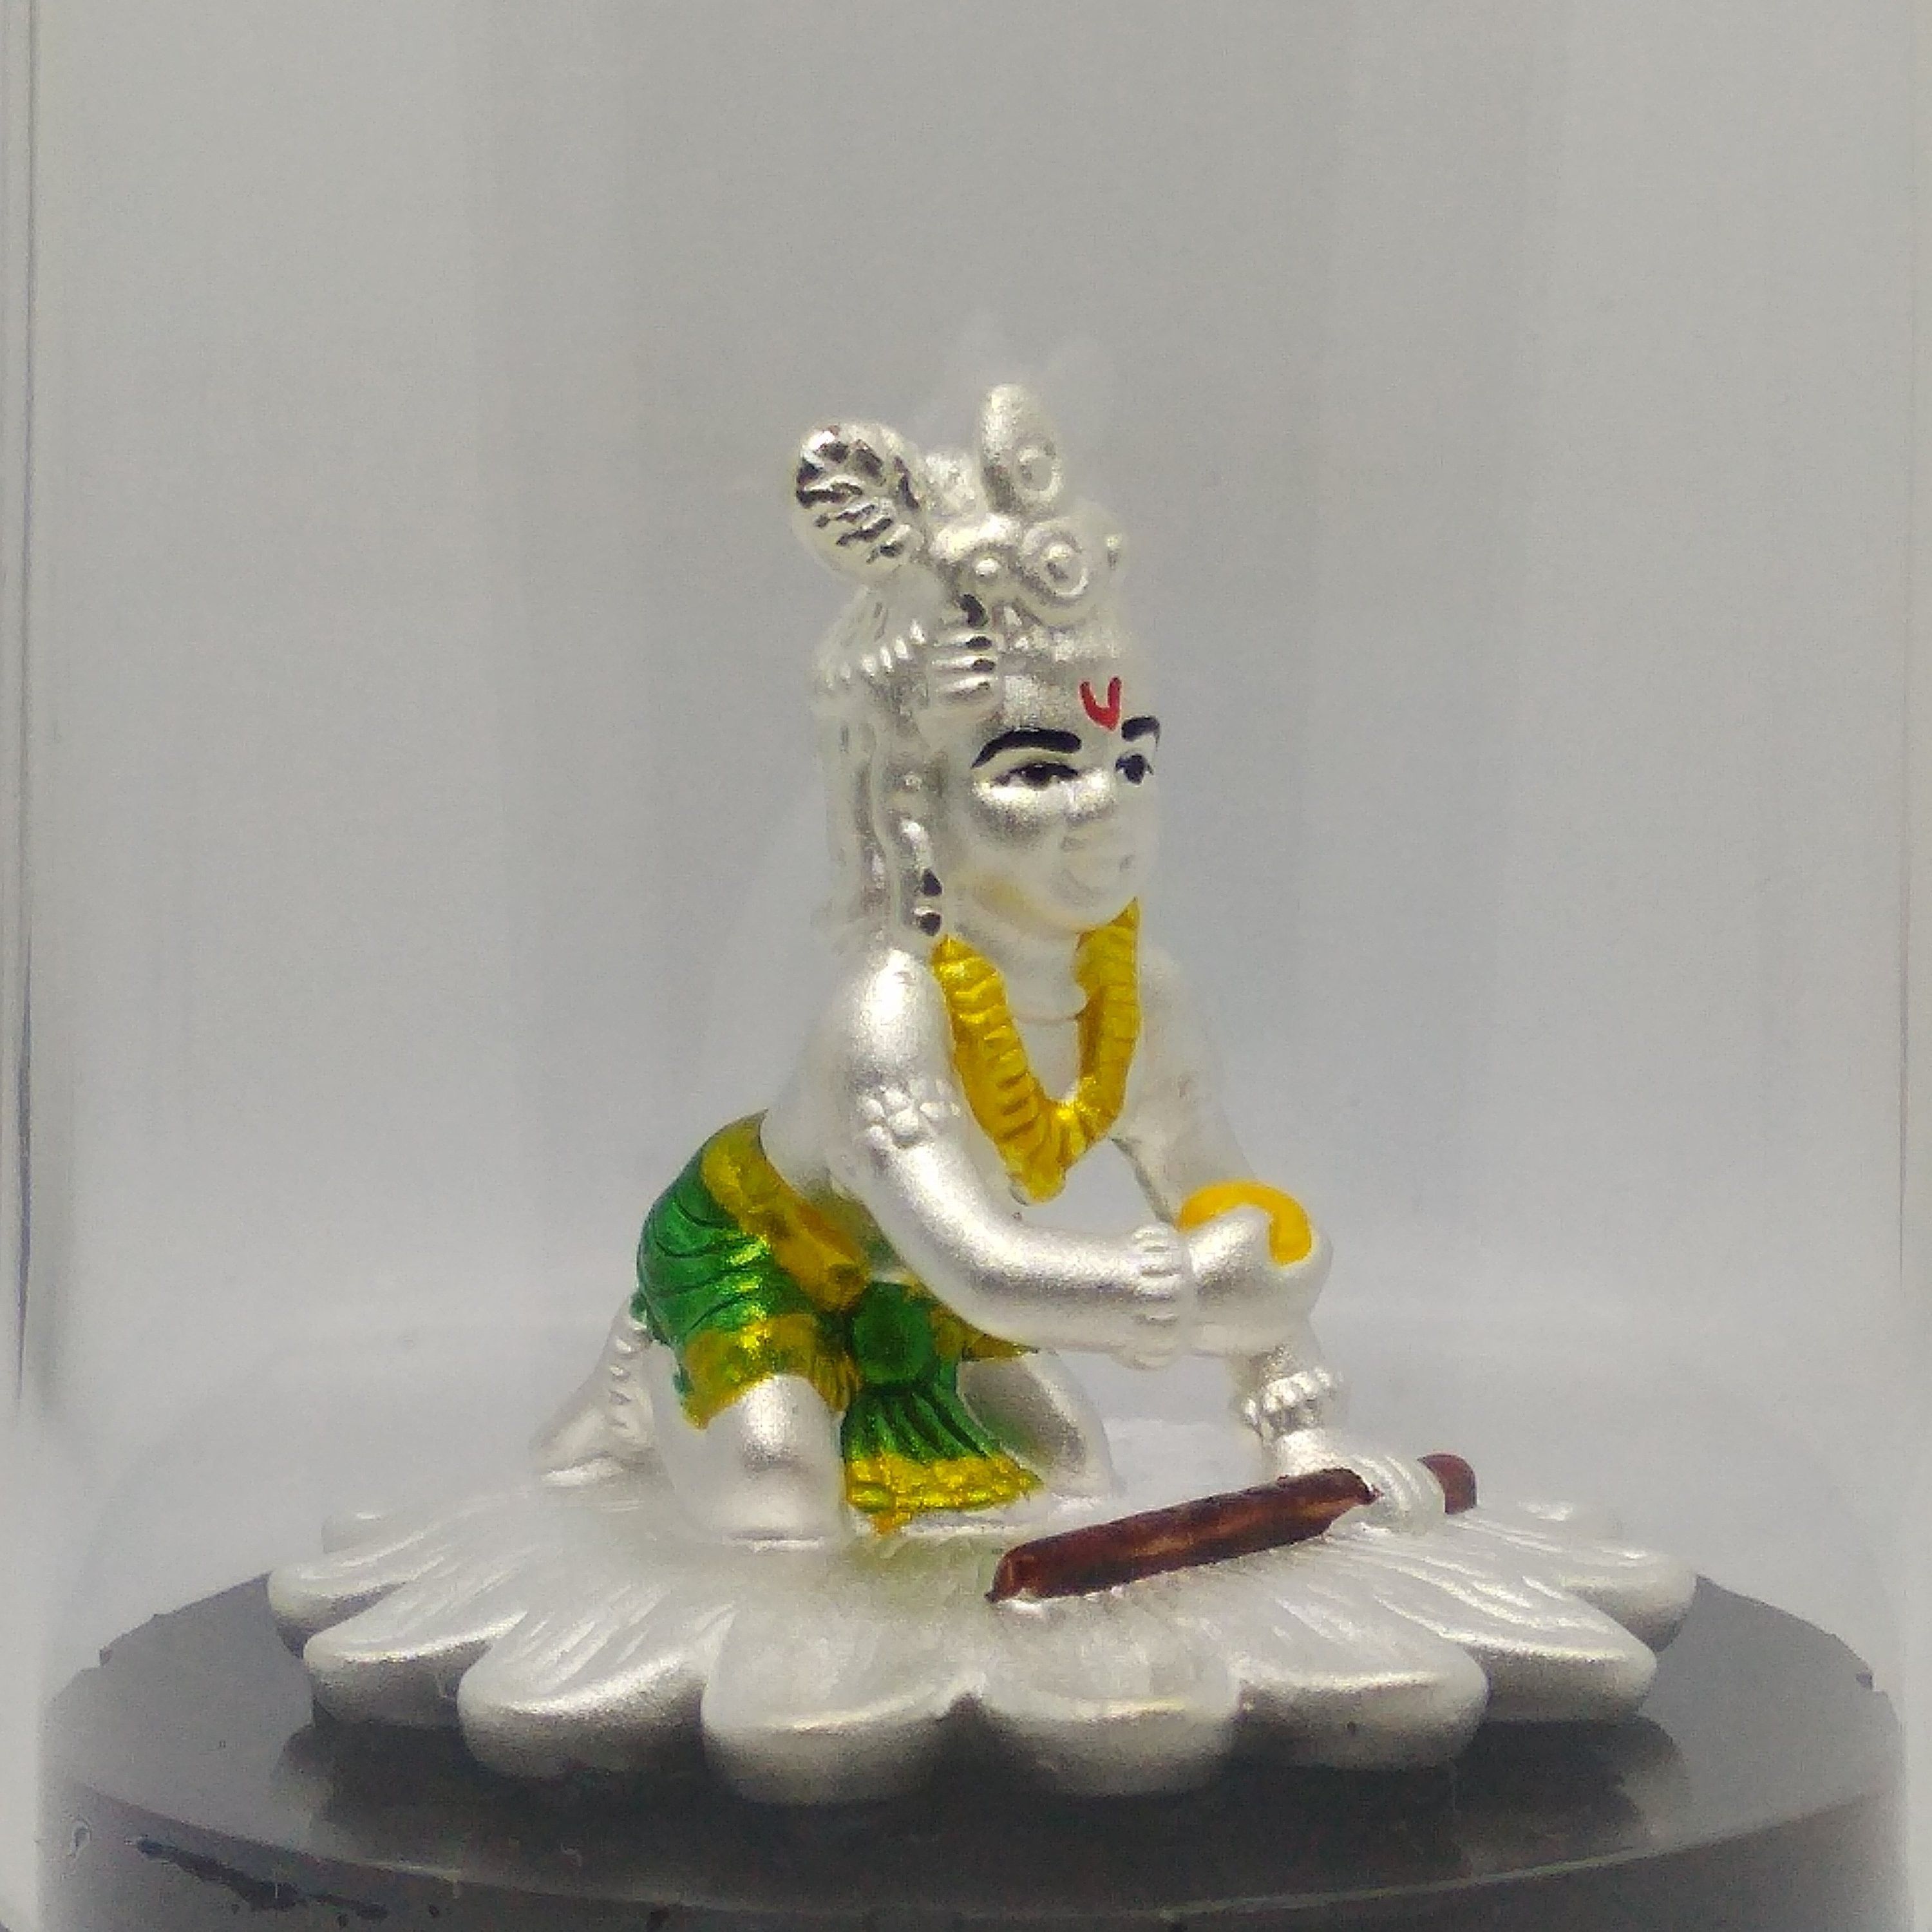 999 silver balgopal krishana/ kanha murti